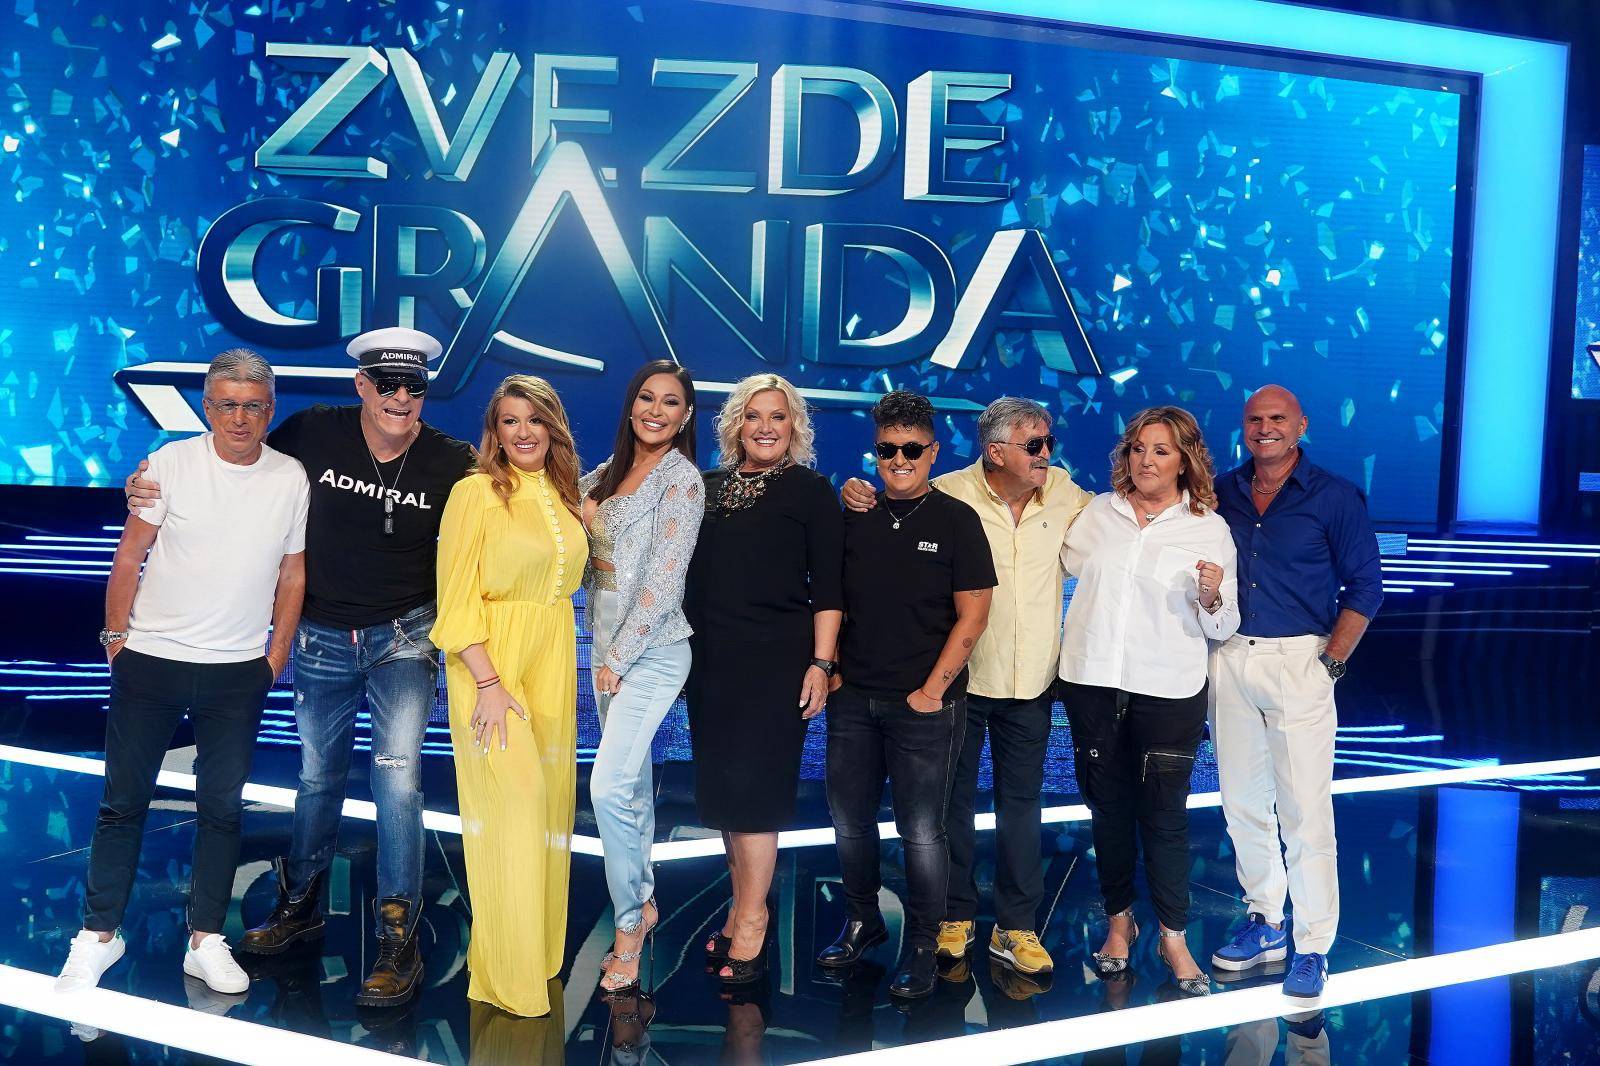 The beginning of the recording of the new season of the show Zvezde granda in the TV studio of Grand Television.

Pocetak snimanja nove sezone emisije Zvezde granda u tv studiju Grand televizije.